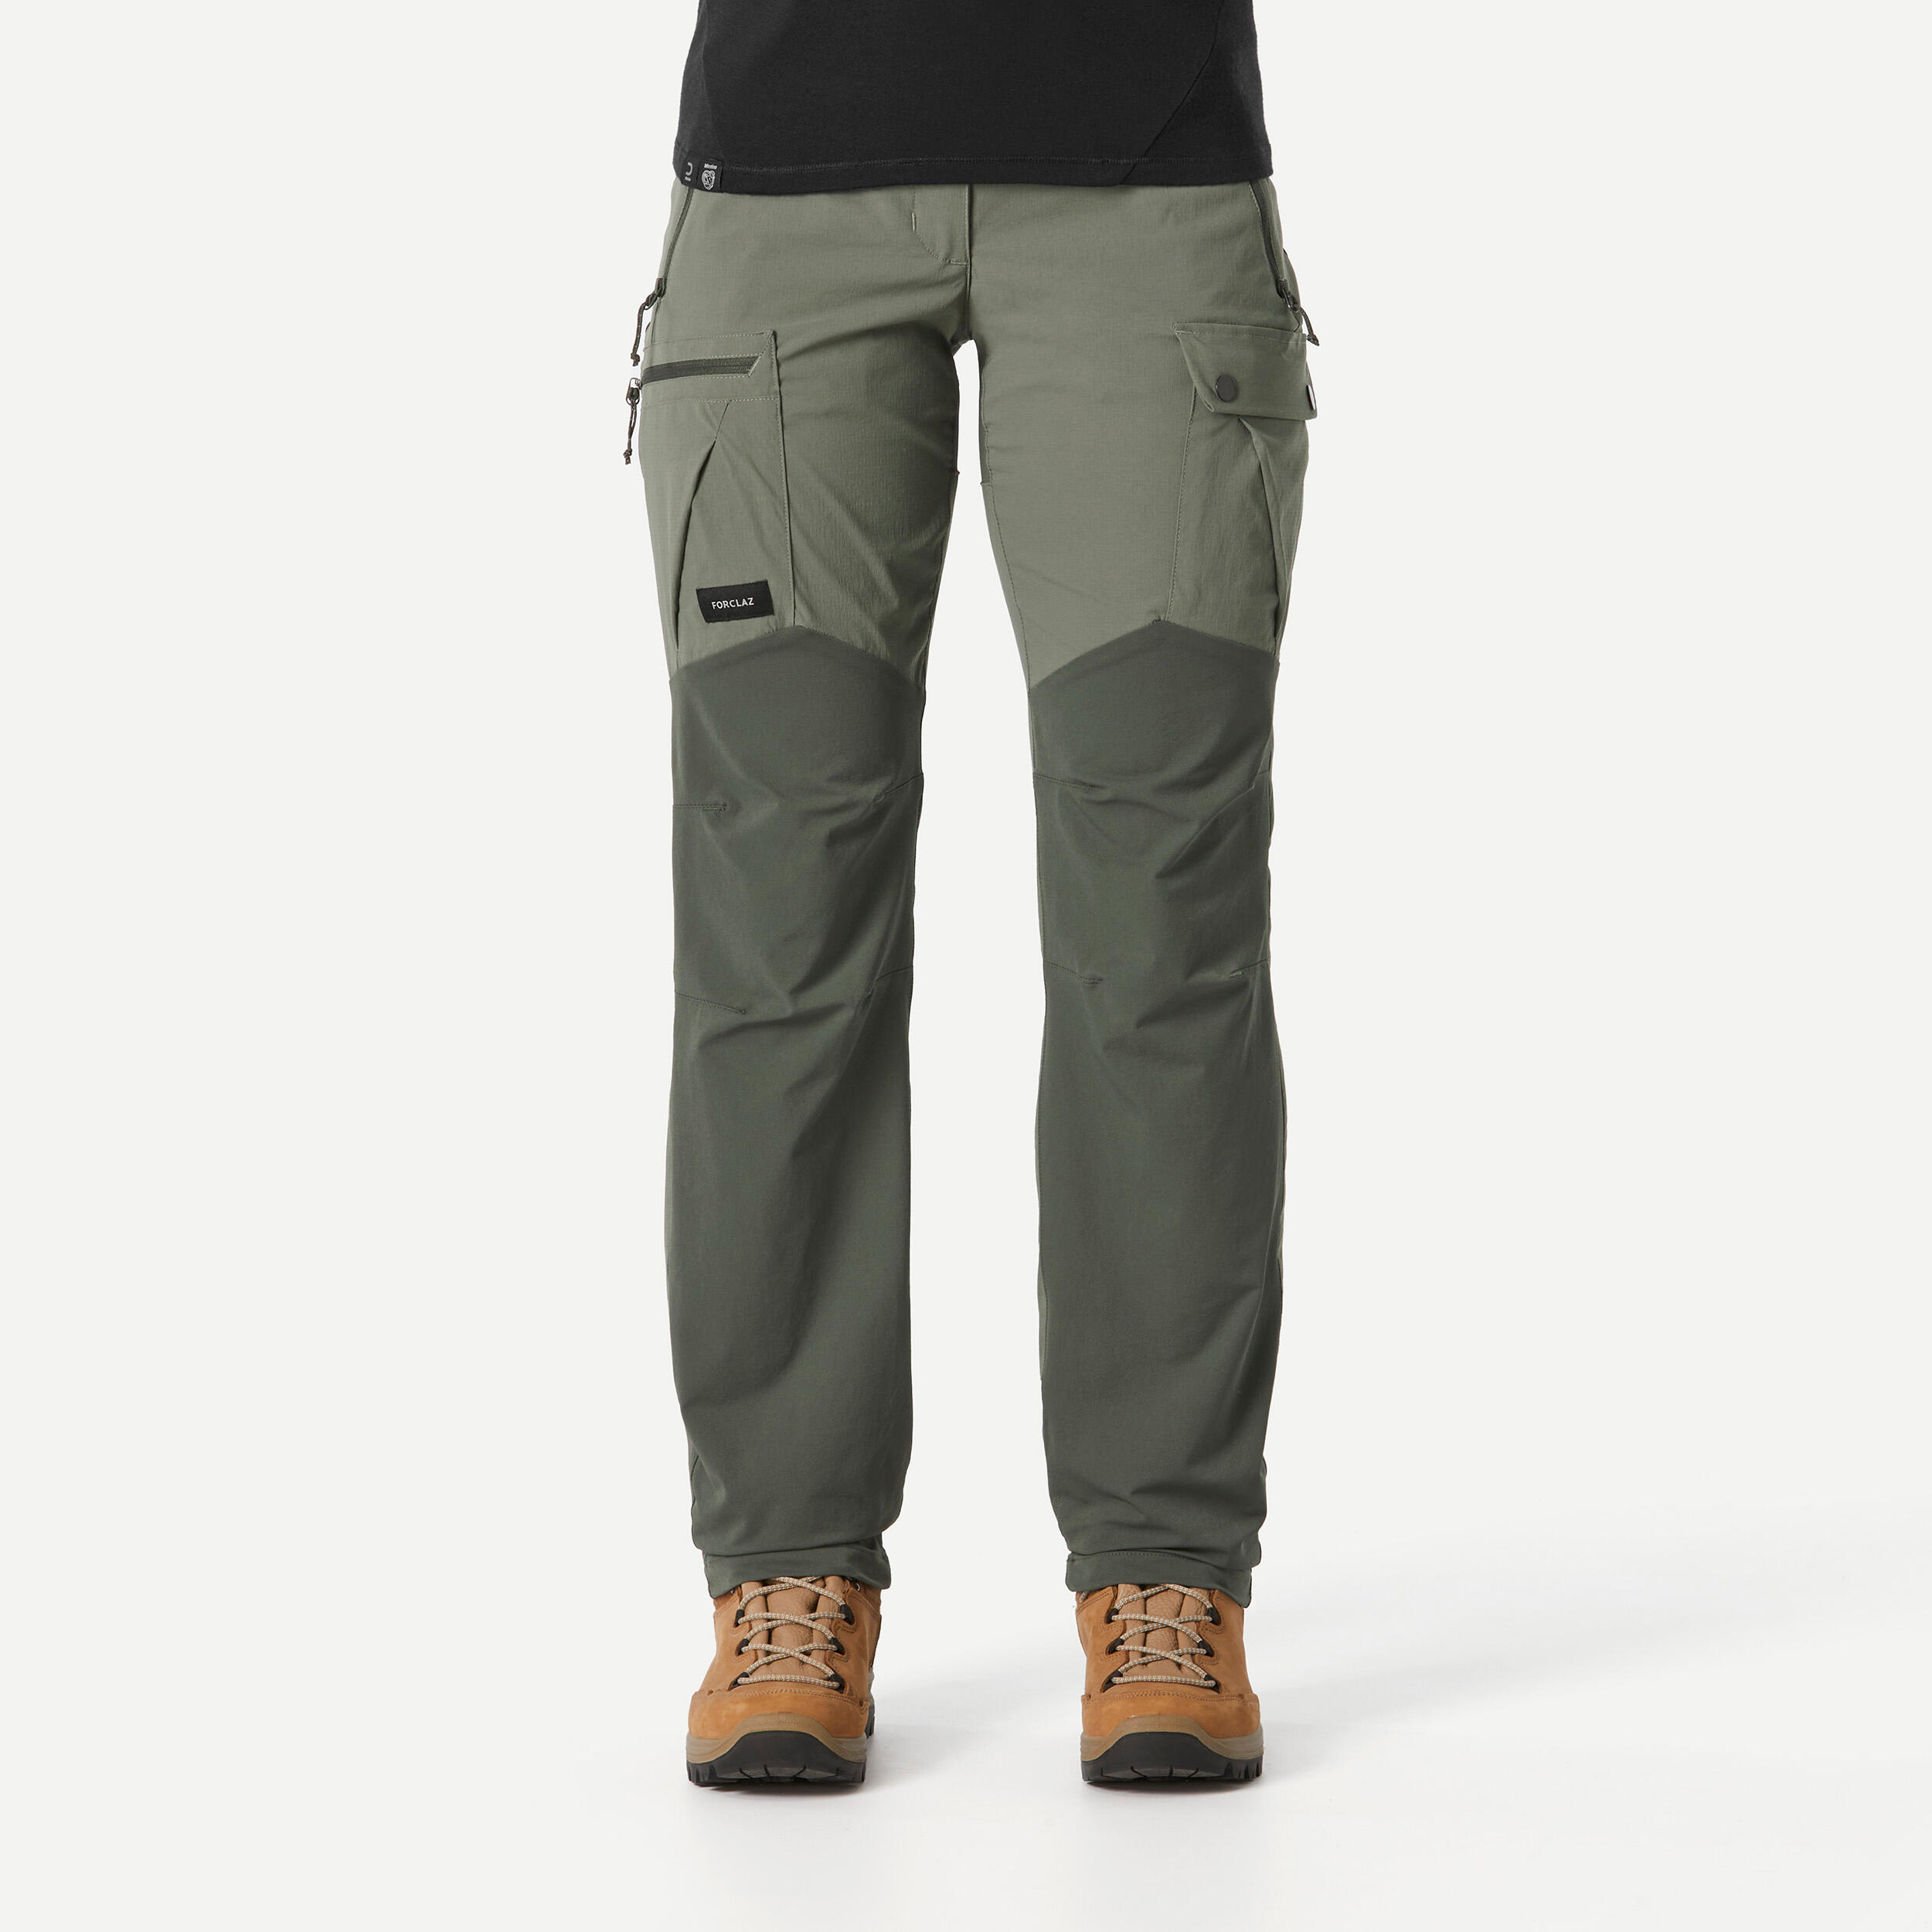 TBMPOY Women's Outdoor Softshell Pants Waterproof Quick Dry Fleece Lined  Hiking Cargo Pants Khaki L 